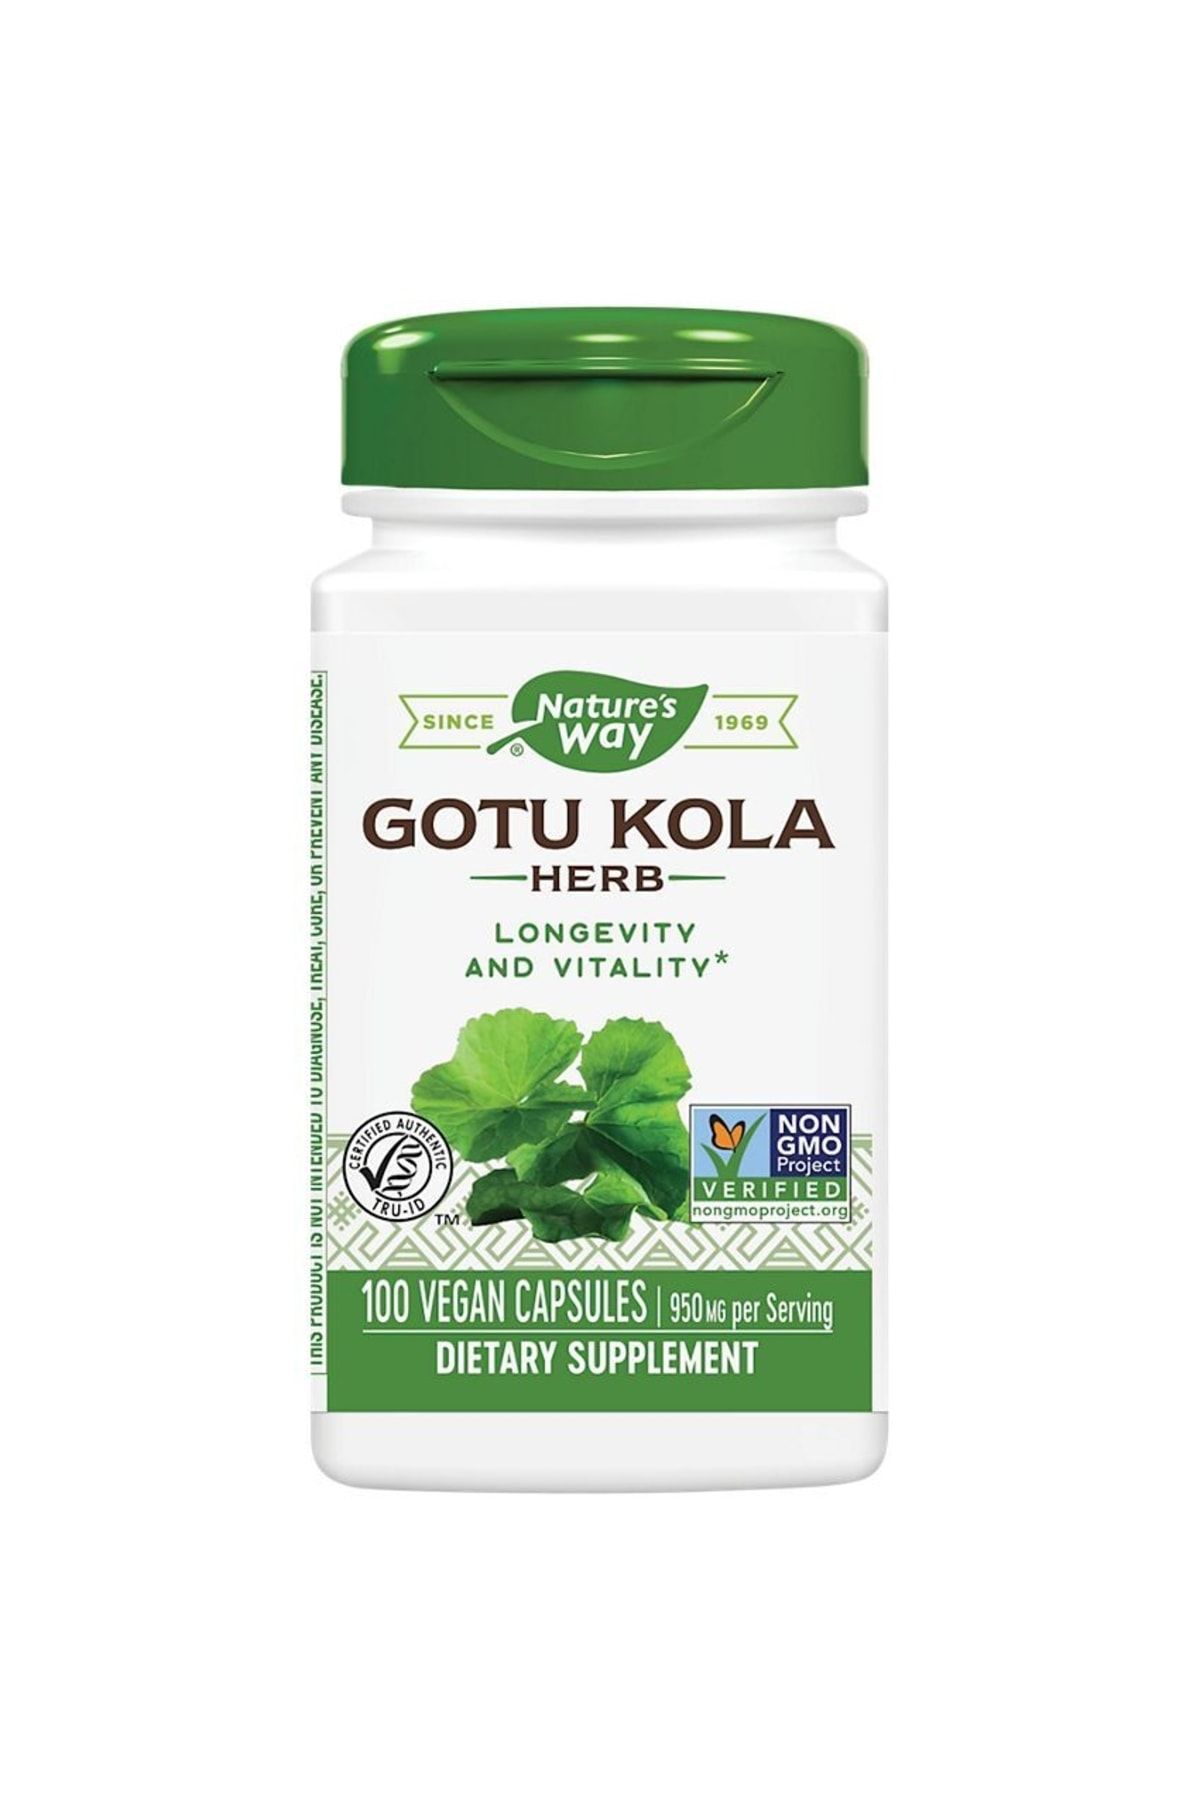 Nature's Way Gotu Kola Herb 475 Mg, Certified Authentic Tru-ıd™ Hafıza Zeka Memory Longevity And Vitality